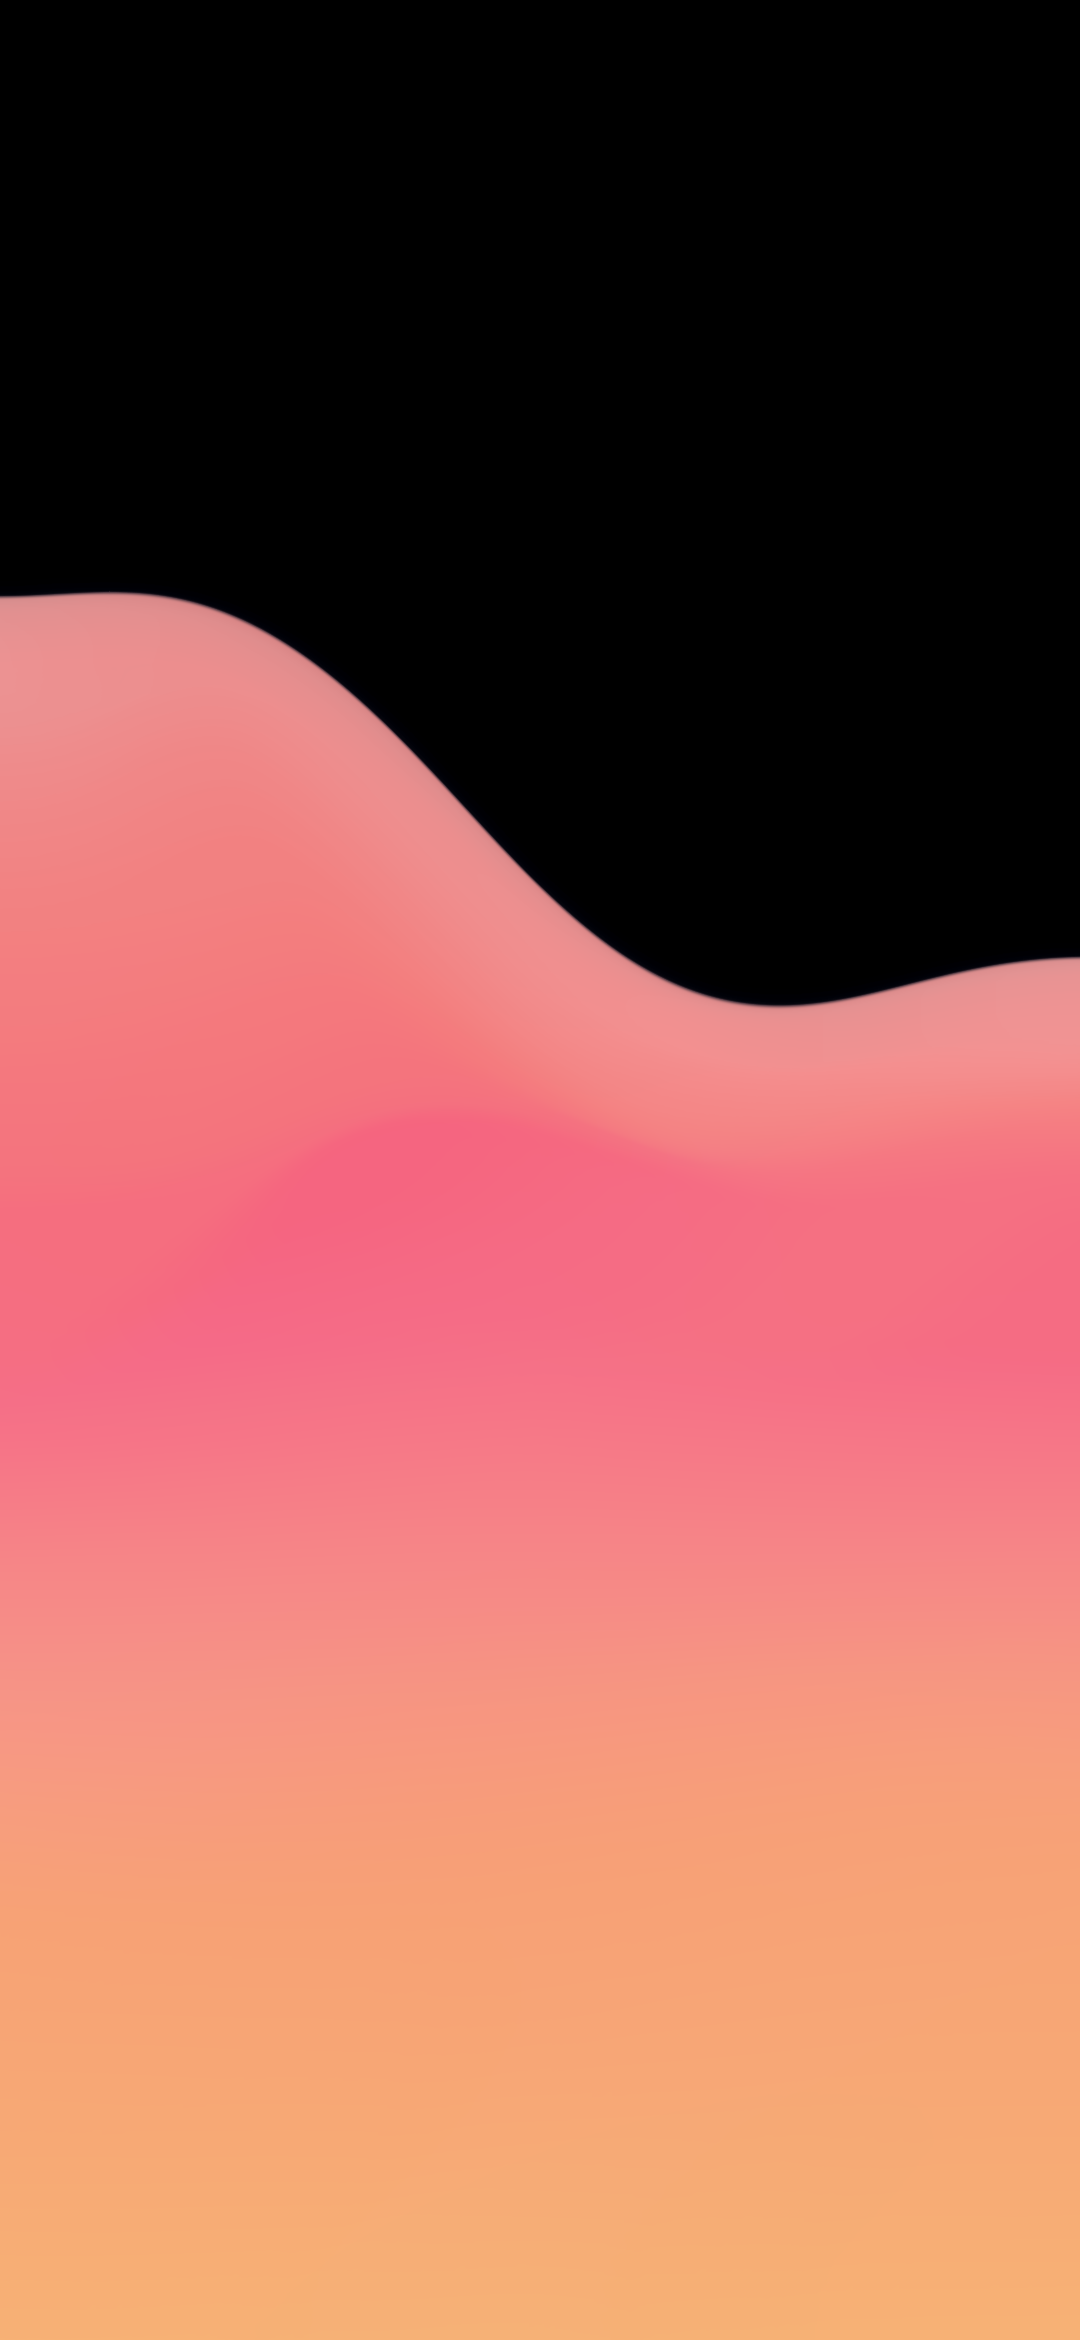 smooth vector iphone idownloadblog wallpaper notforyou666 pink orange gradient